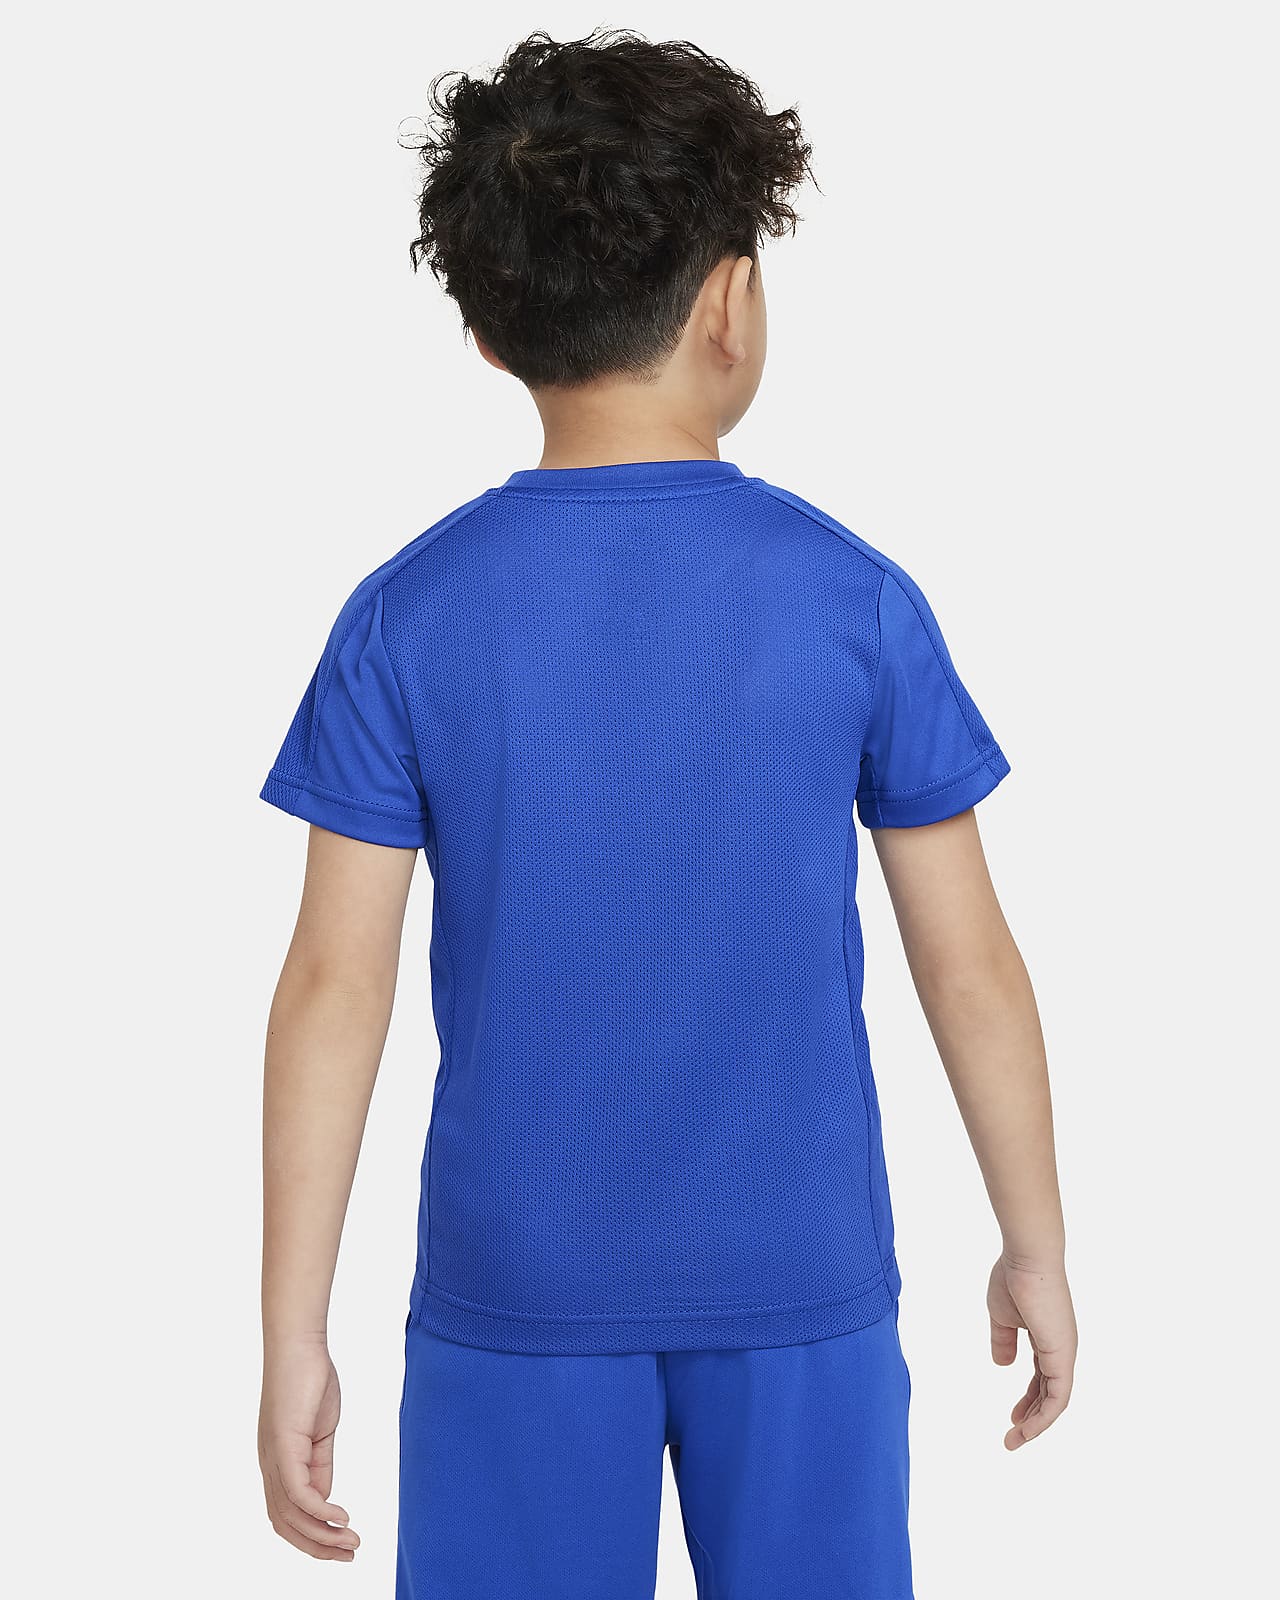 Kids\' Dri-FIT Little Top. Academy Short Sleeve Nike